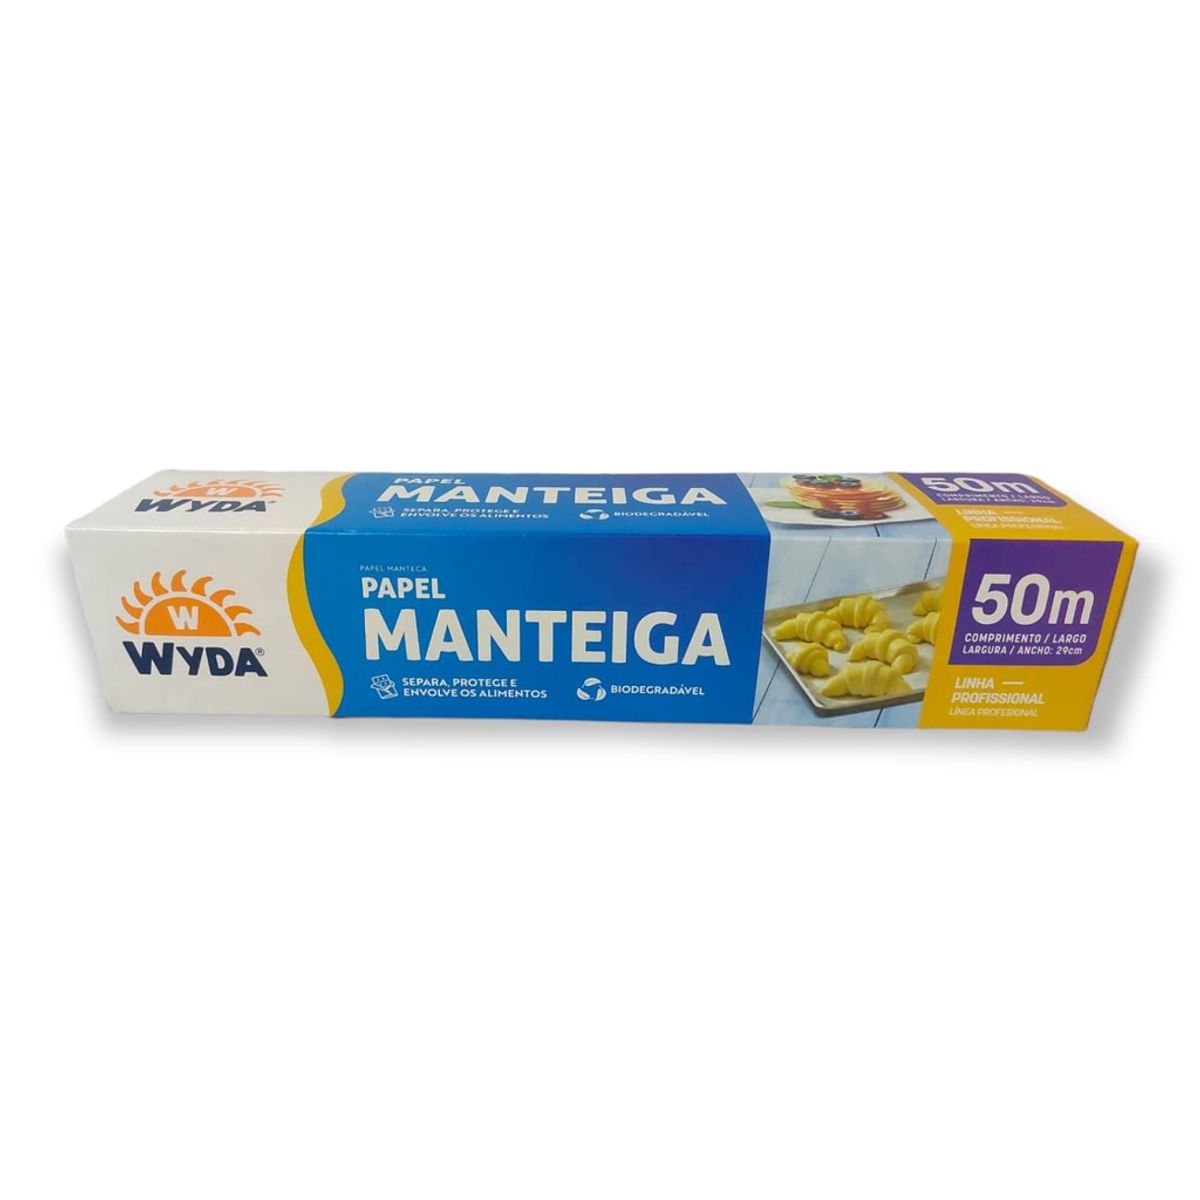 Papel Manteiga Wyda 29cmx50m image number 0